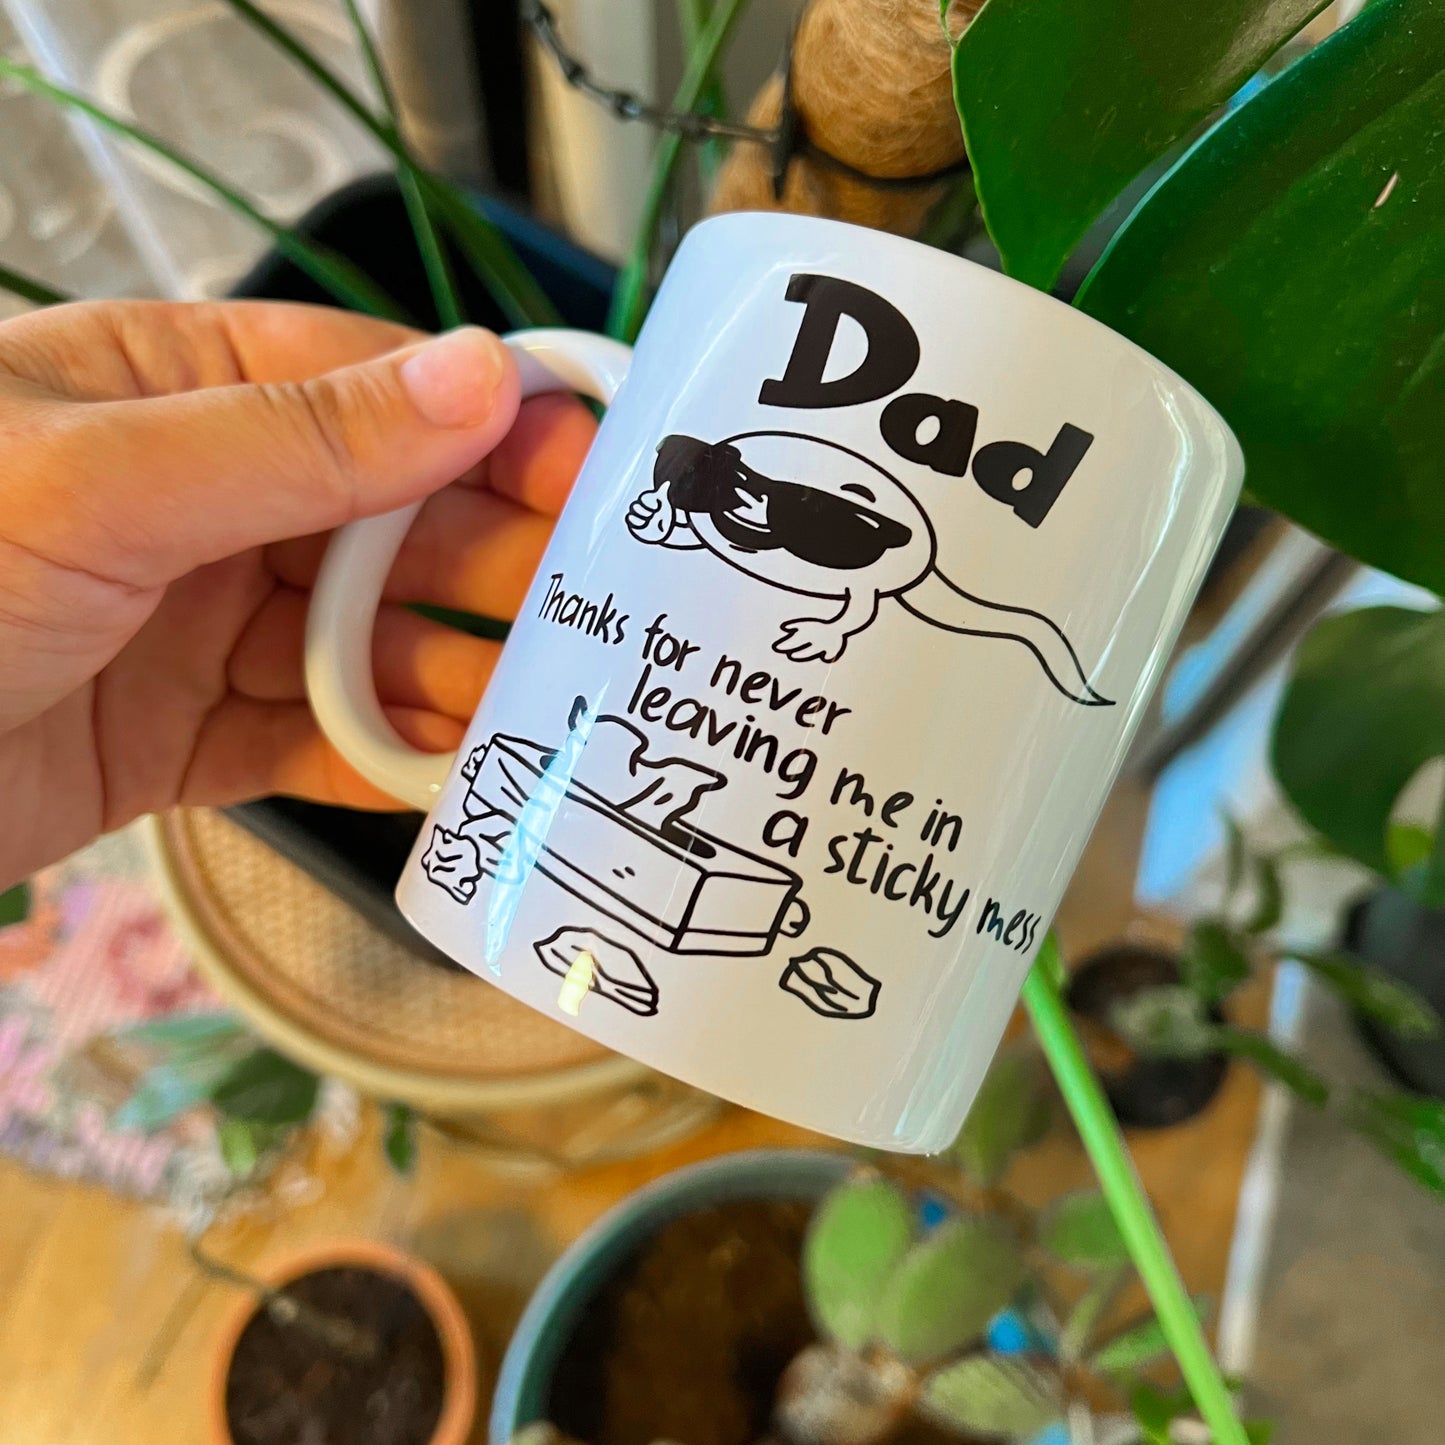 Sticky mess dad mug (inappropriate)